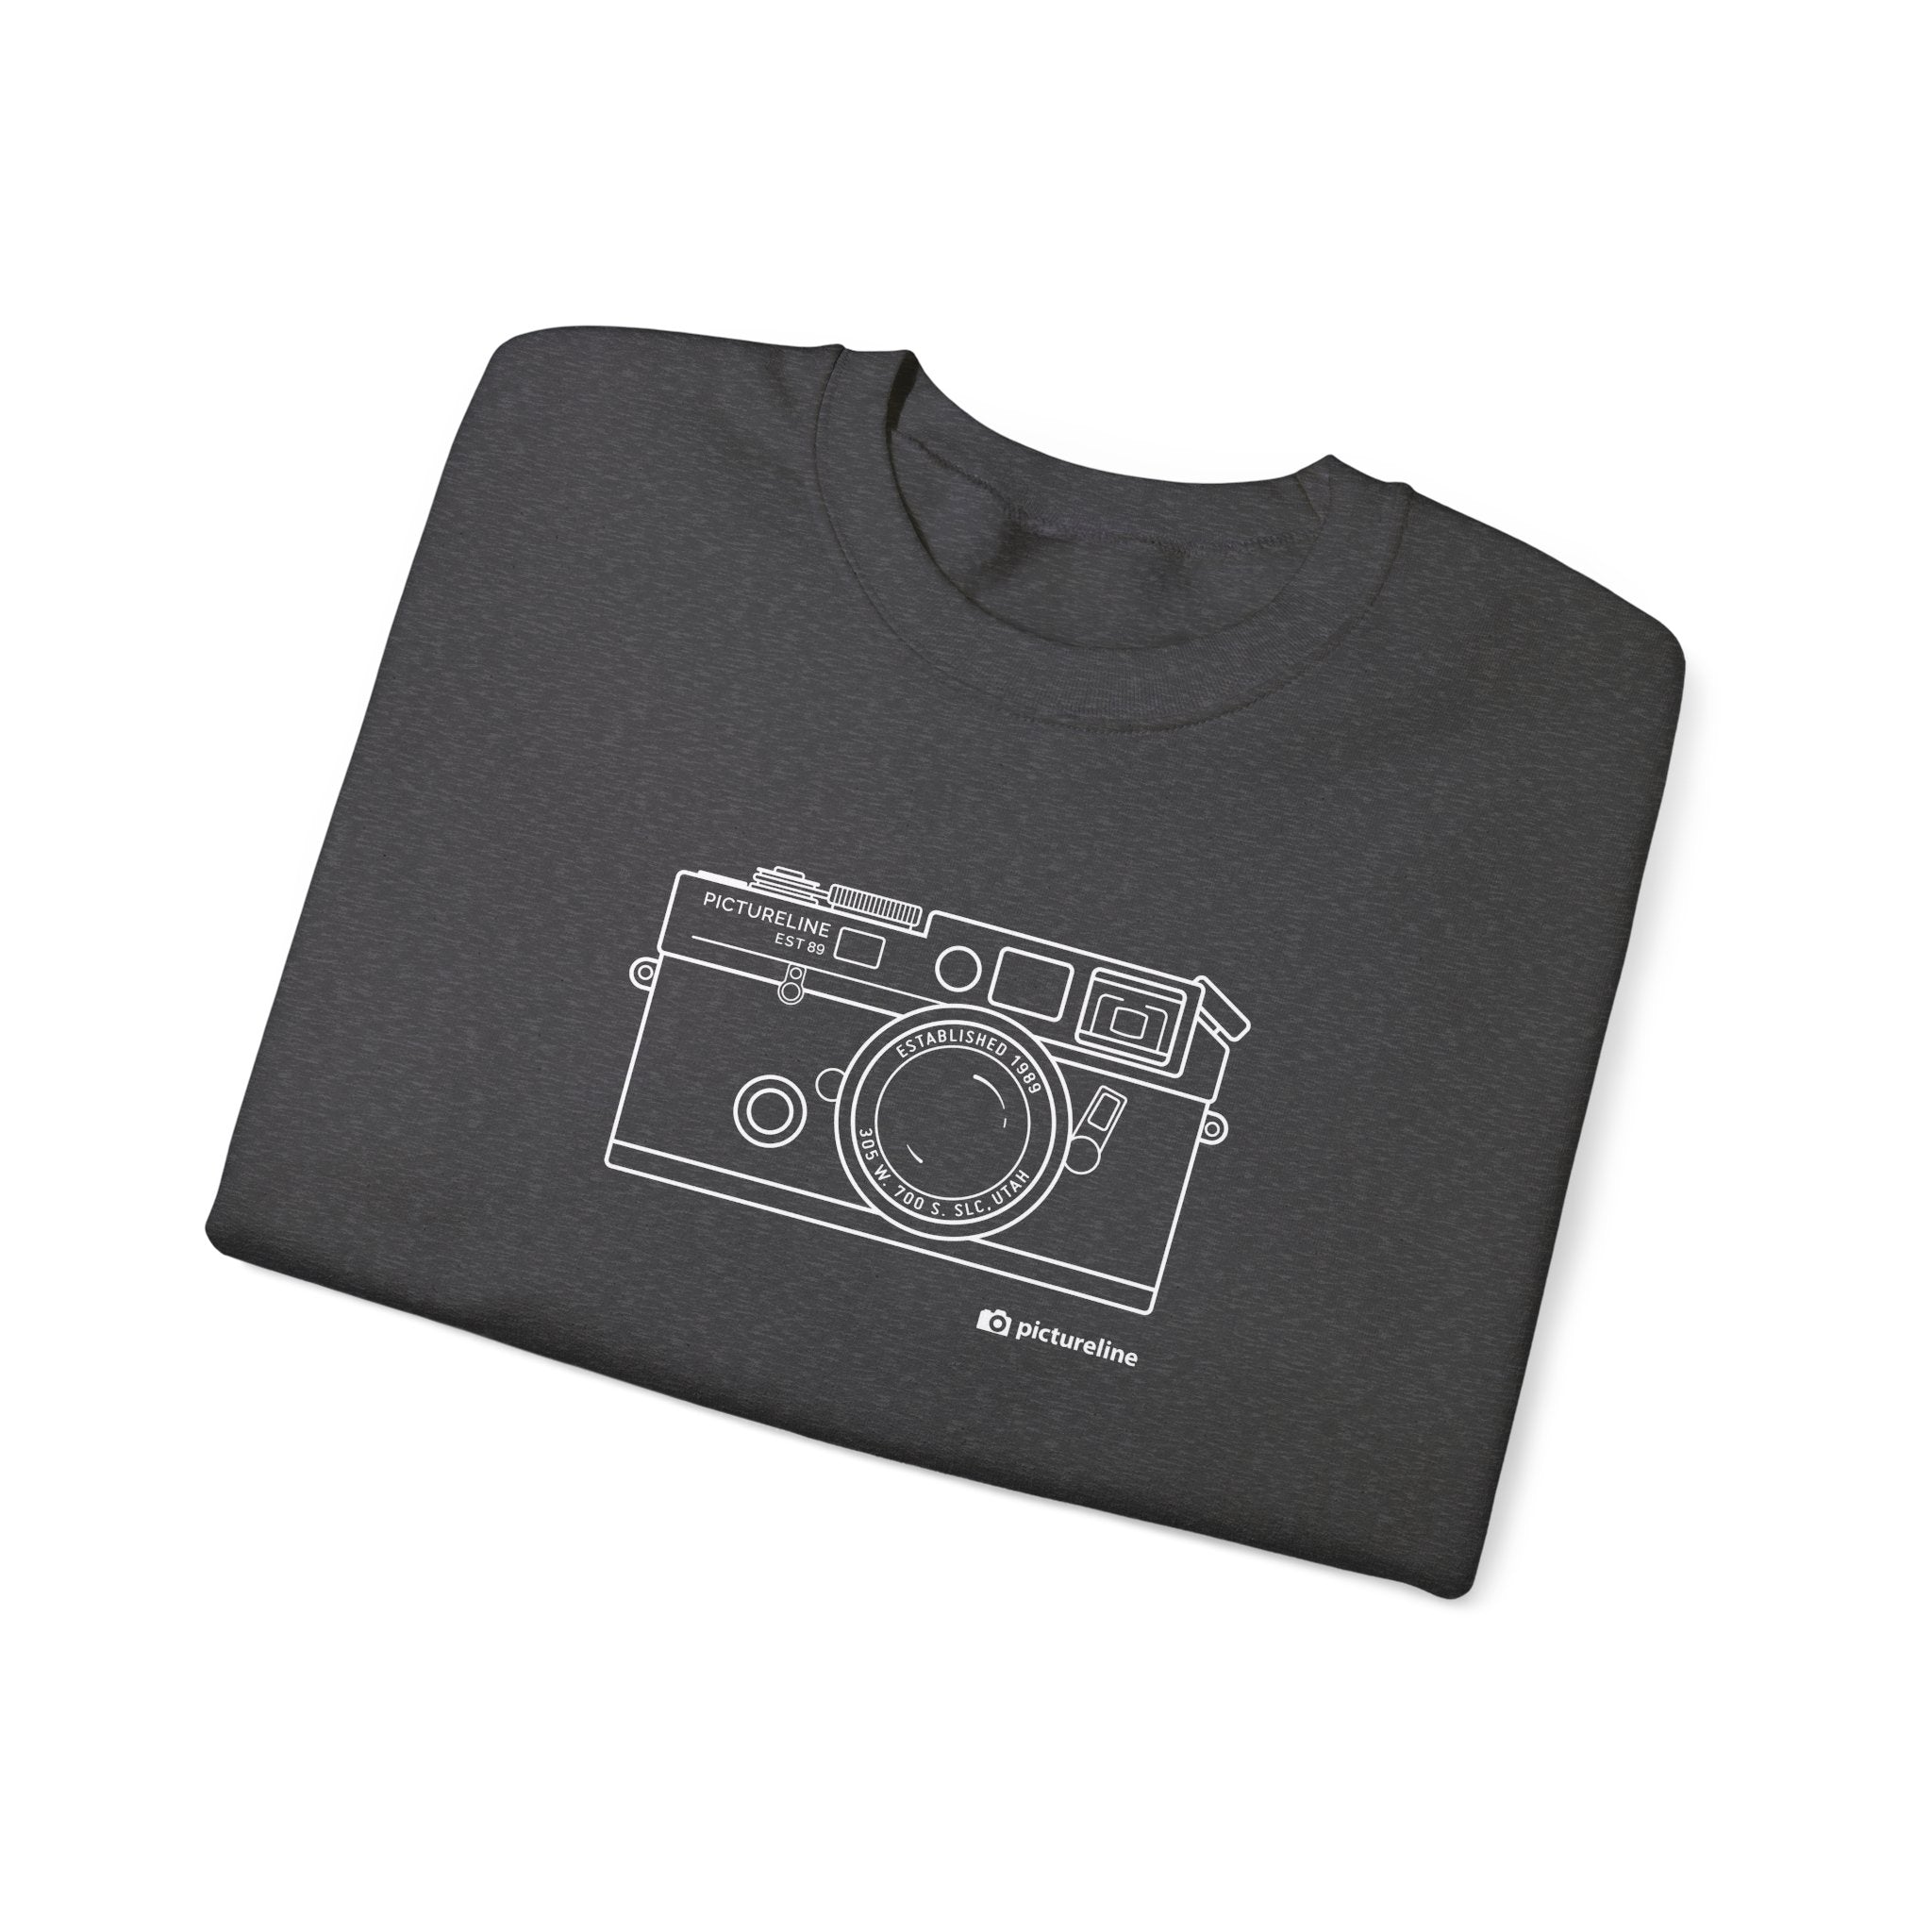 Vintage Camera Unisex Crewneck Sweatshirt